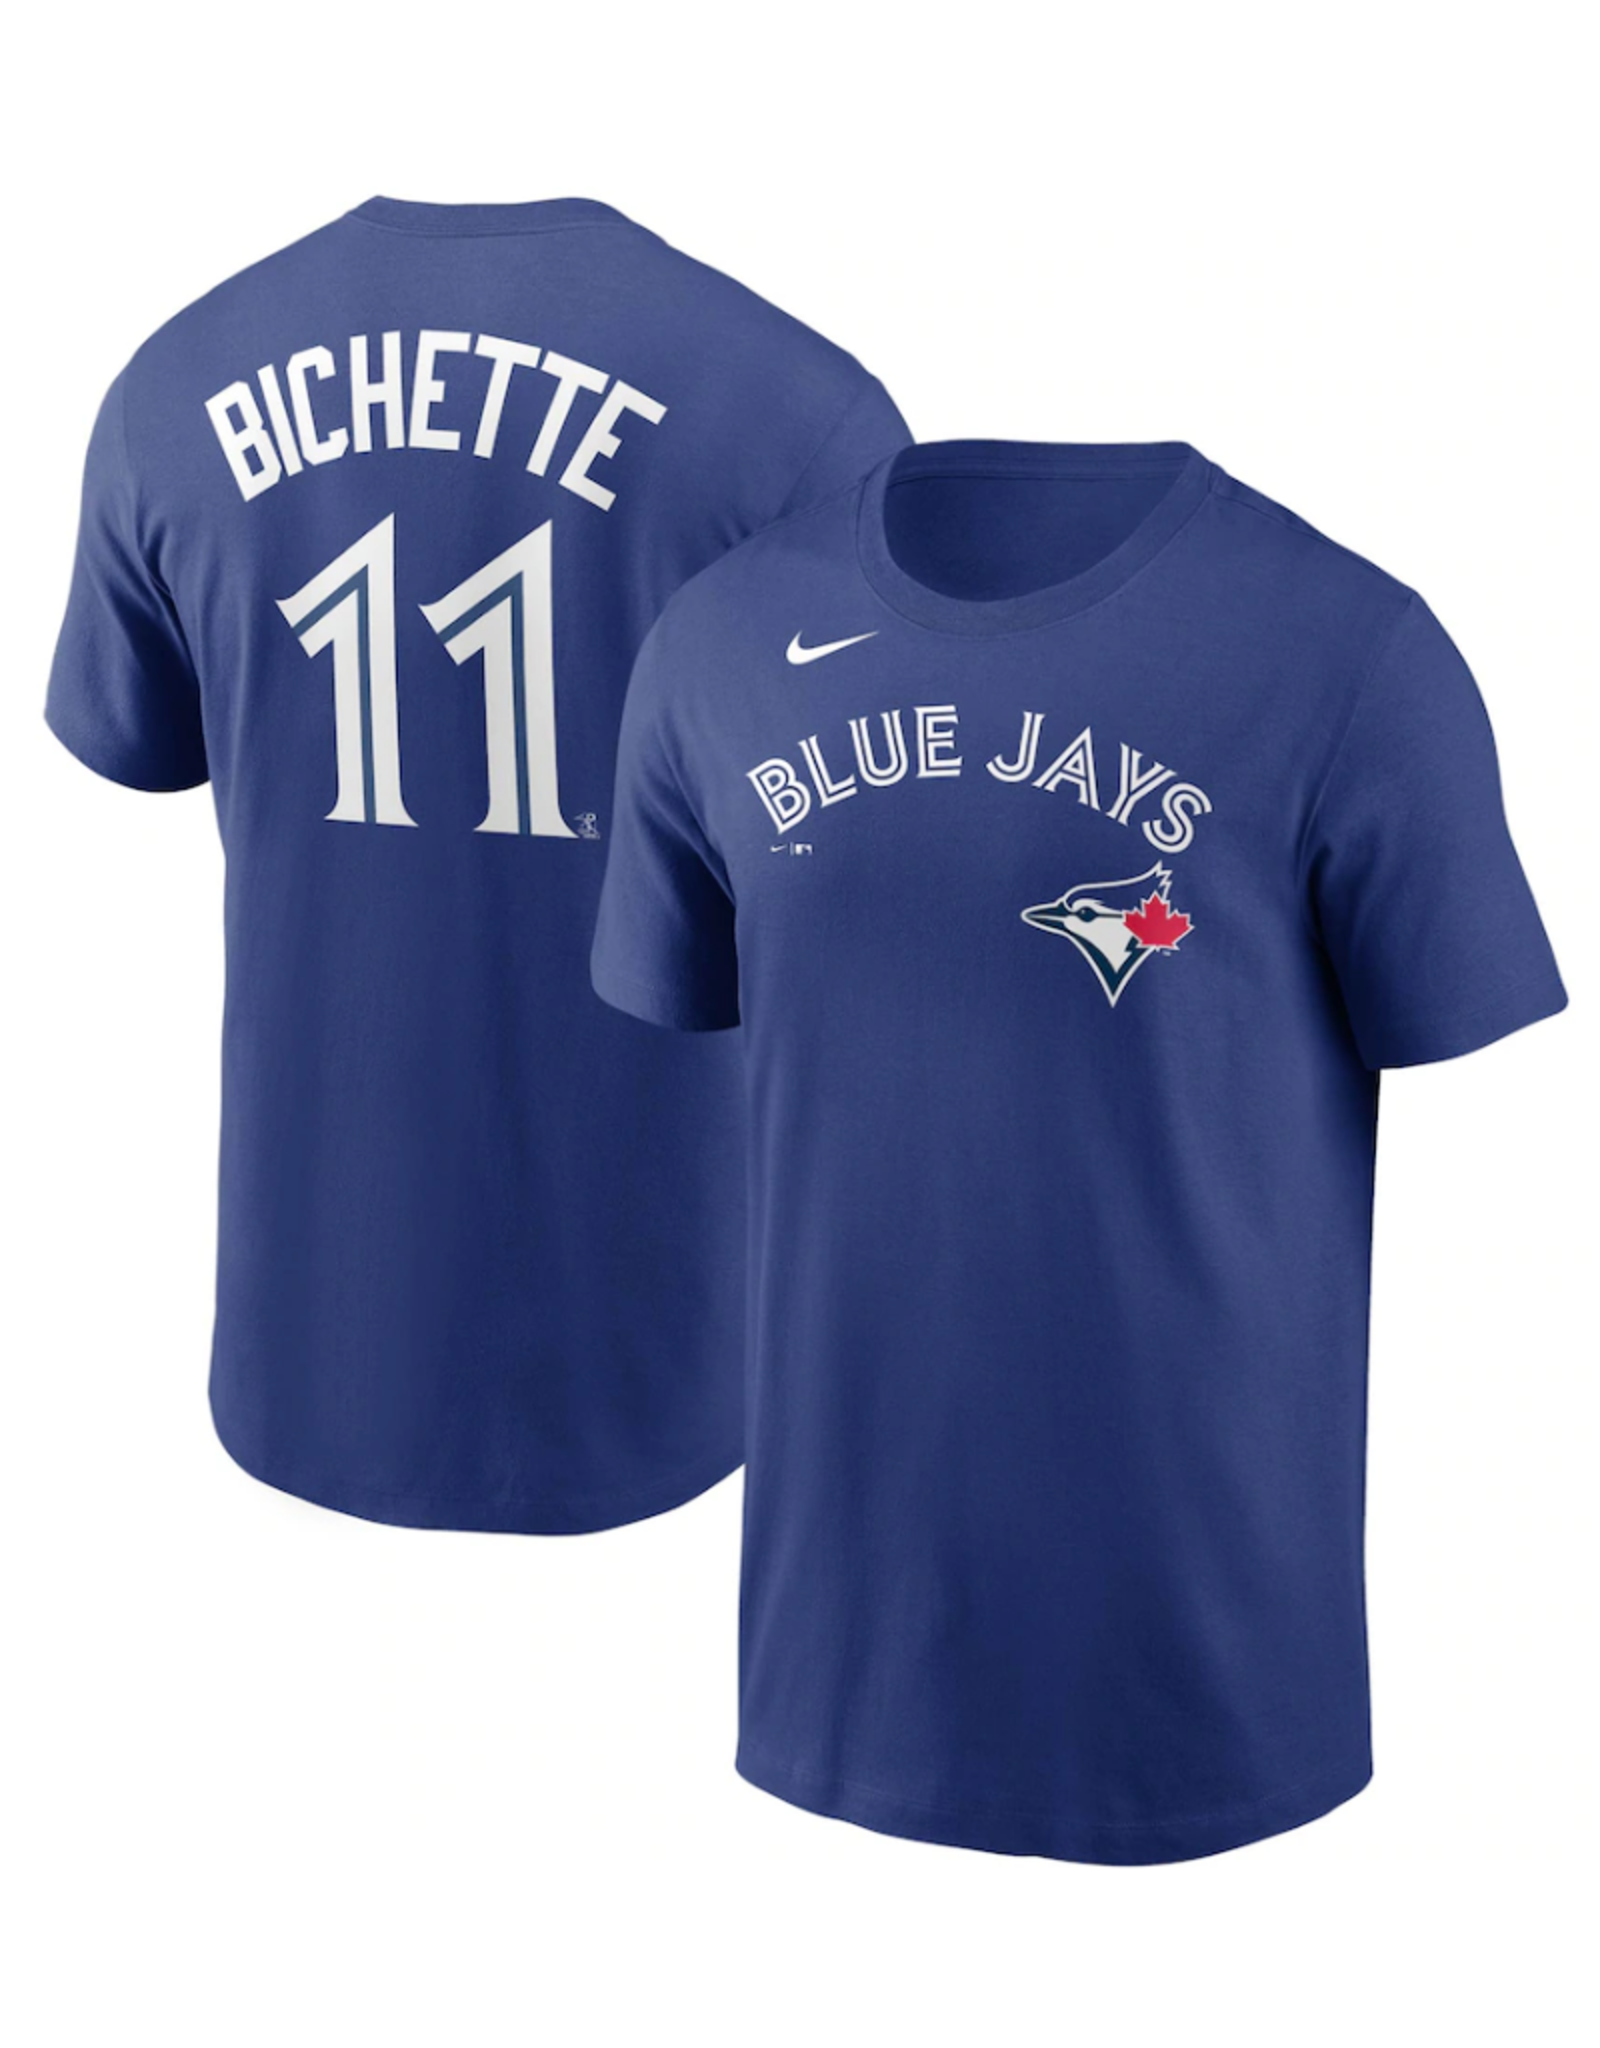 Nike Men's Player T-Shirt Bichette #11 Toronto Blue Jays Royal